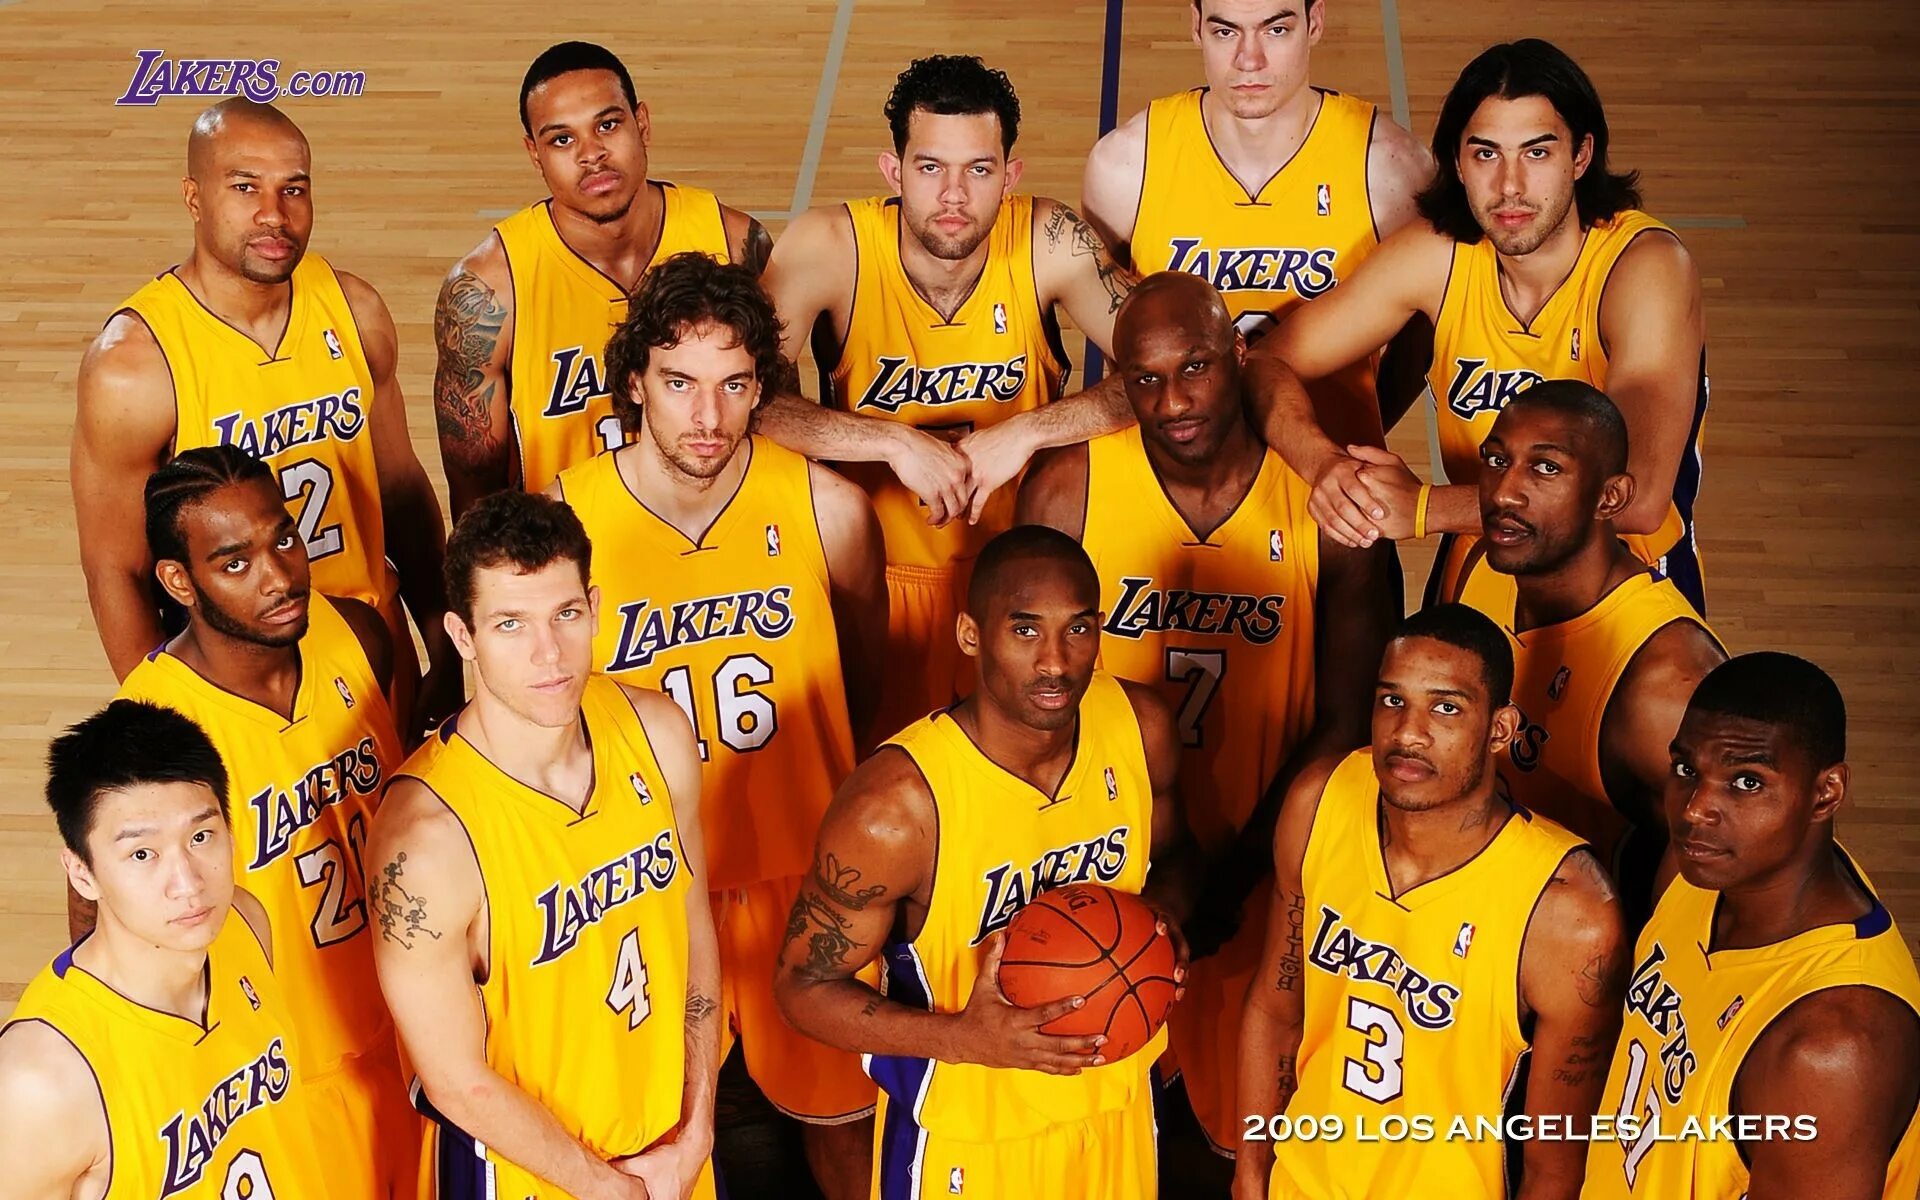 La lakers. Баскетбольная команда Лос Анджелес Лейкерс. Лос-Анджелес Лейкерс игроки «Лос-Анджелес Лейкерс». Баскетболисты Лос Анджелес Лейкерс. Баскенбольная команда la.